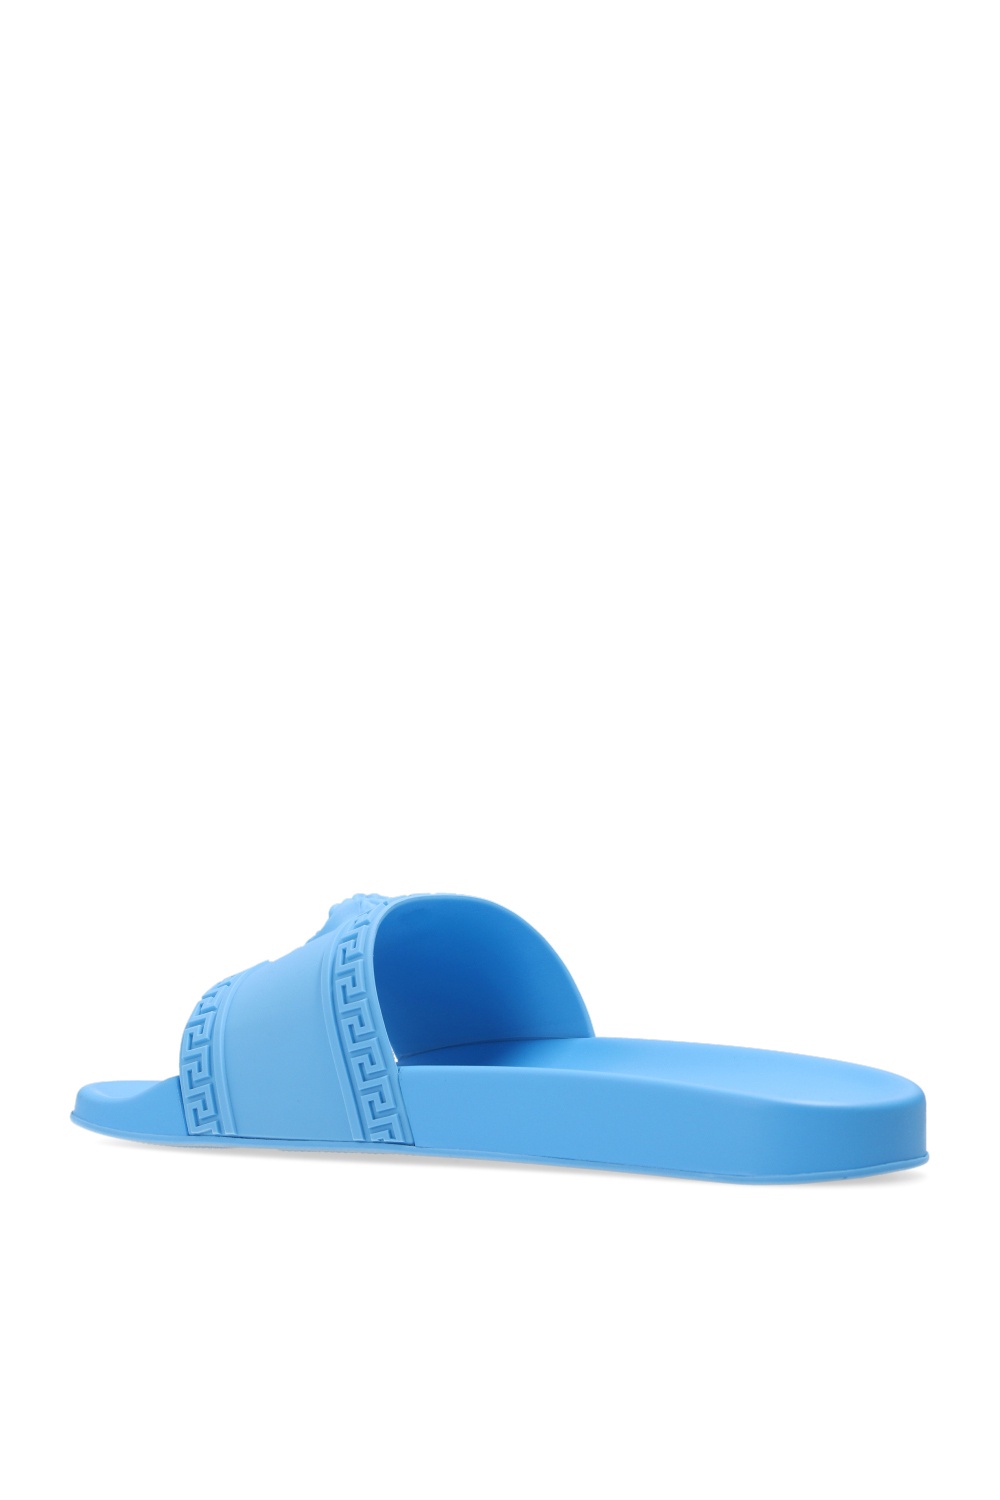 blue versace slides